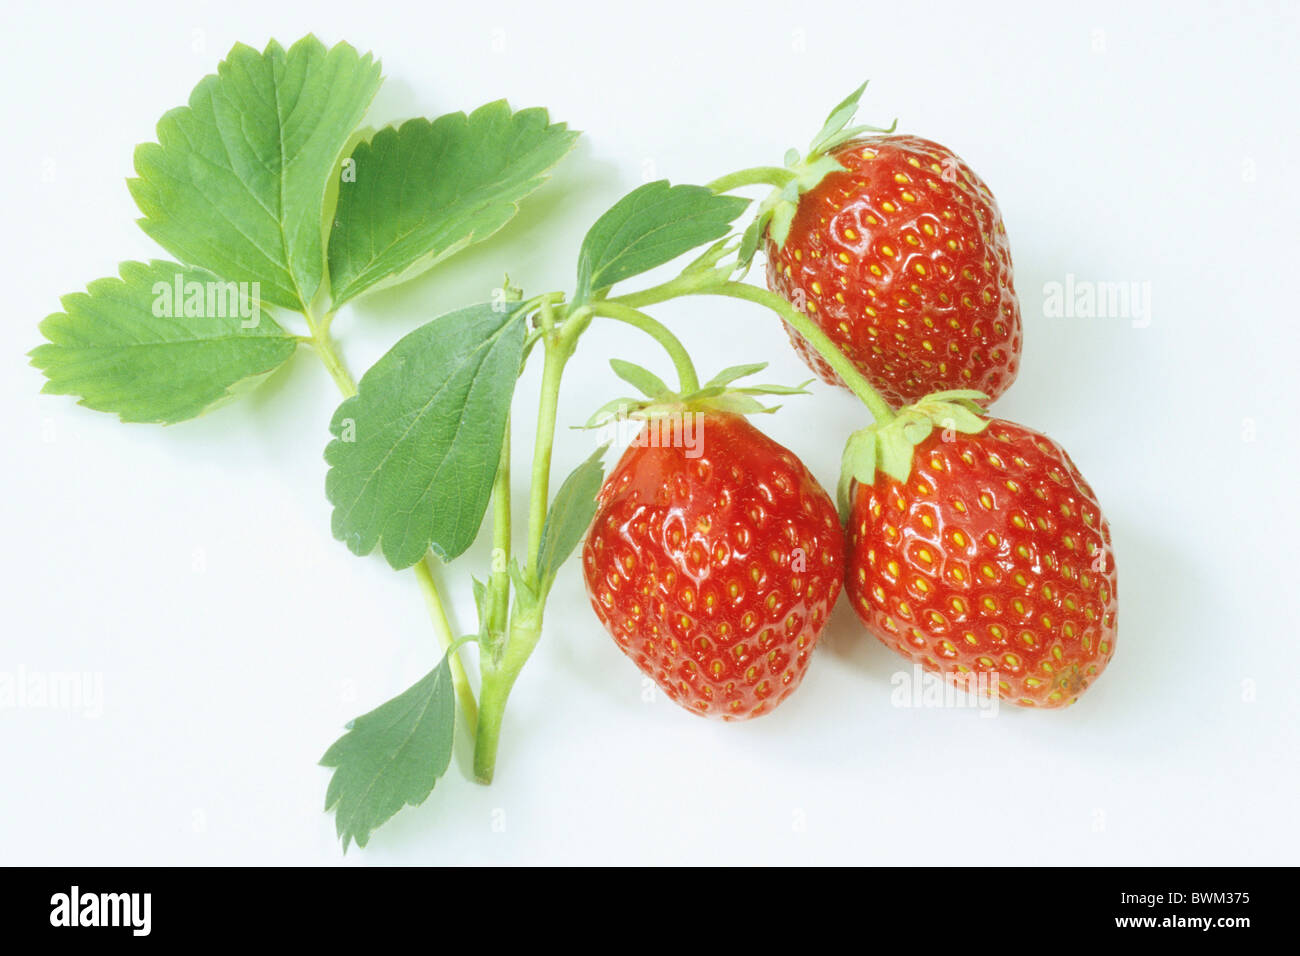 Garden Strawberry (Fragaria x ananassa), ripe strawberries with leaves, studio picture. Stock Photo